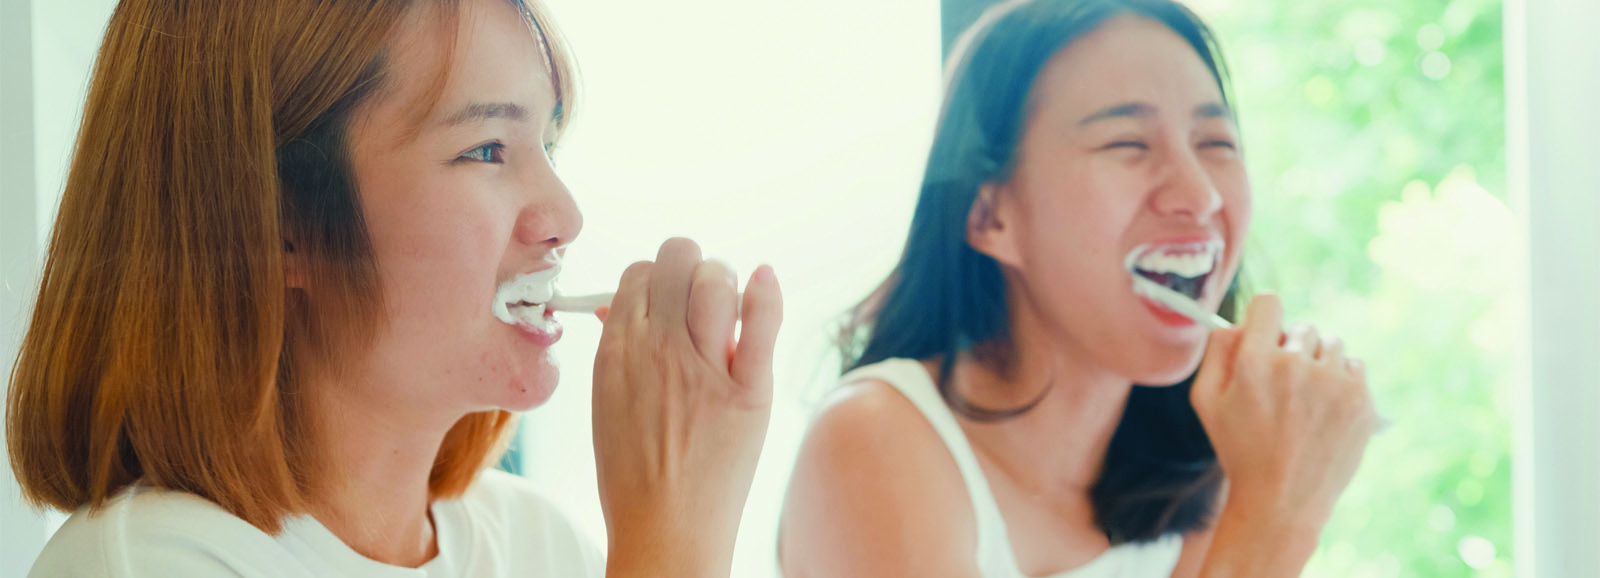 women-brushing-their-teeth-1600x578.jpg